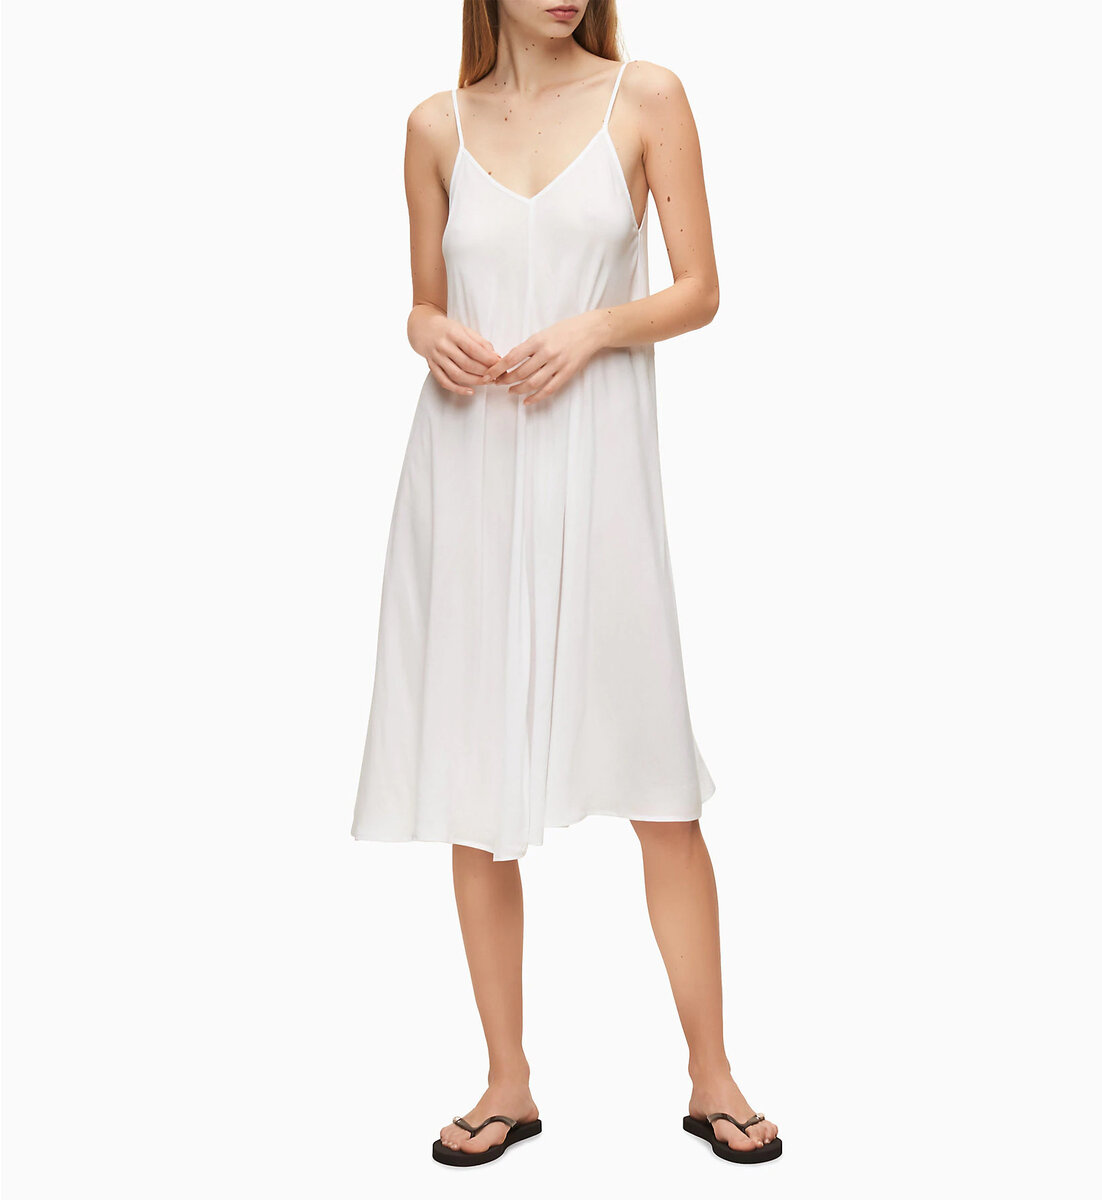 Dámské plážové šaty 7154 bílá - Calvin Klein, bílá M i10_P41455_1:5_2:91_